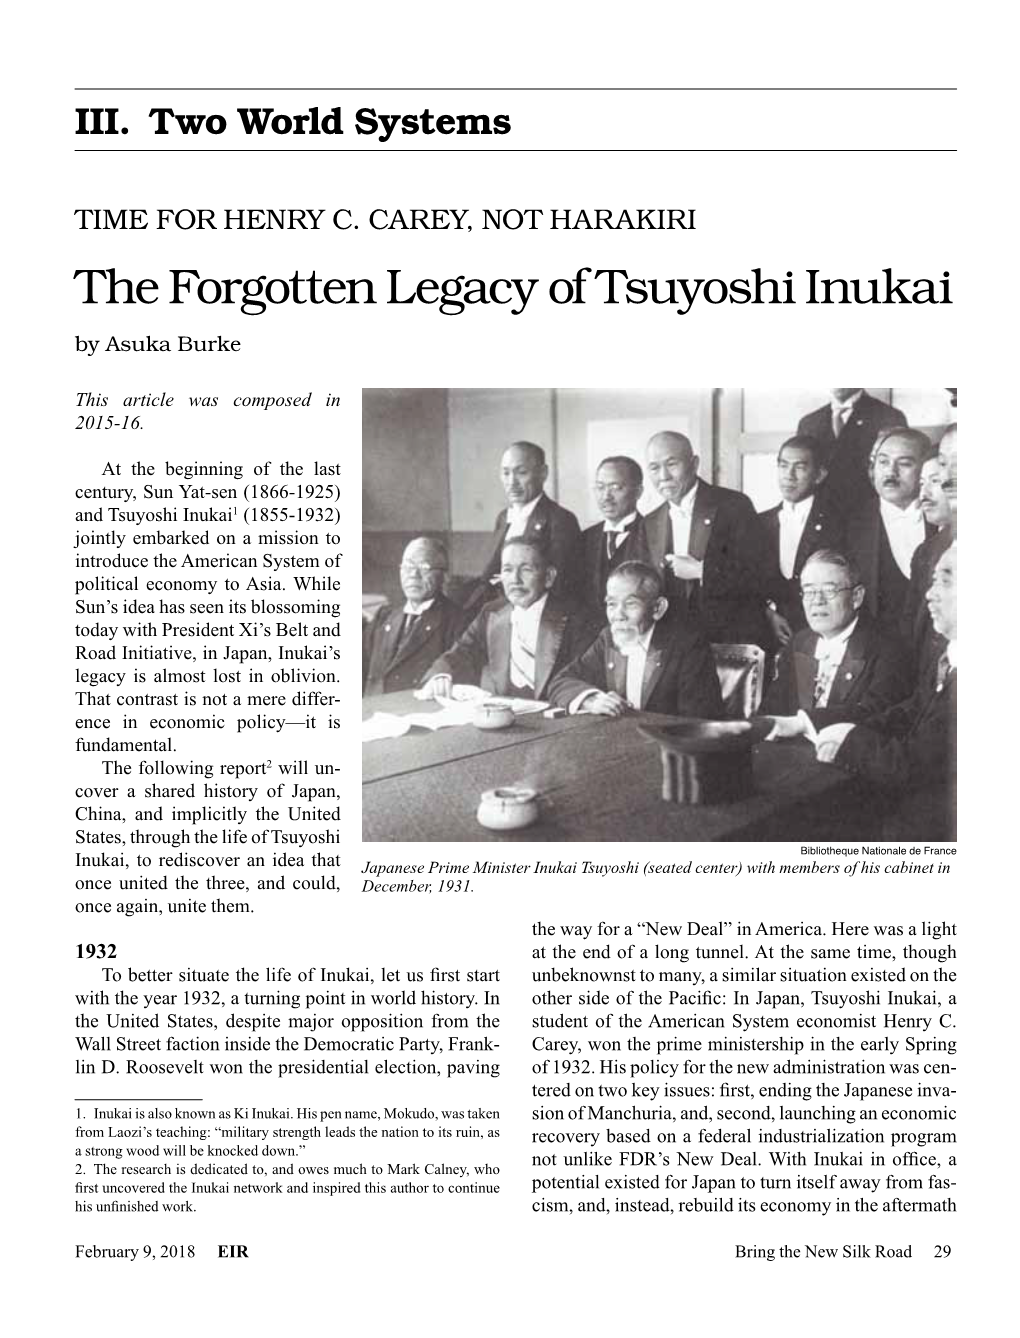 TIME for HENRY C. CAREY, NOT HARAKIRI the Forgotten Legacy of Tsuyoshi Inukai by Asuka Burke